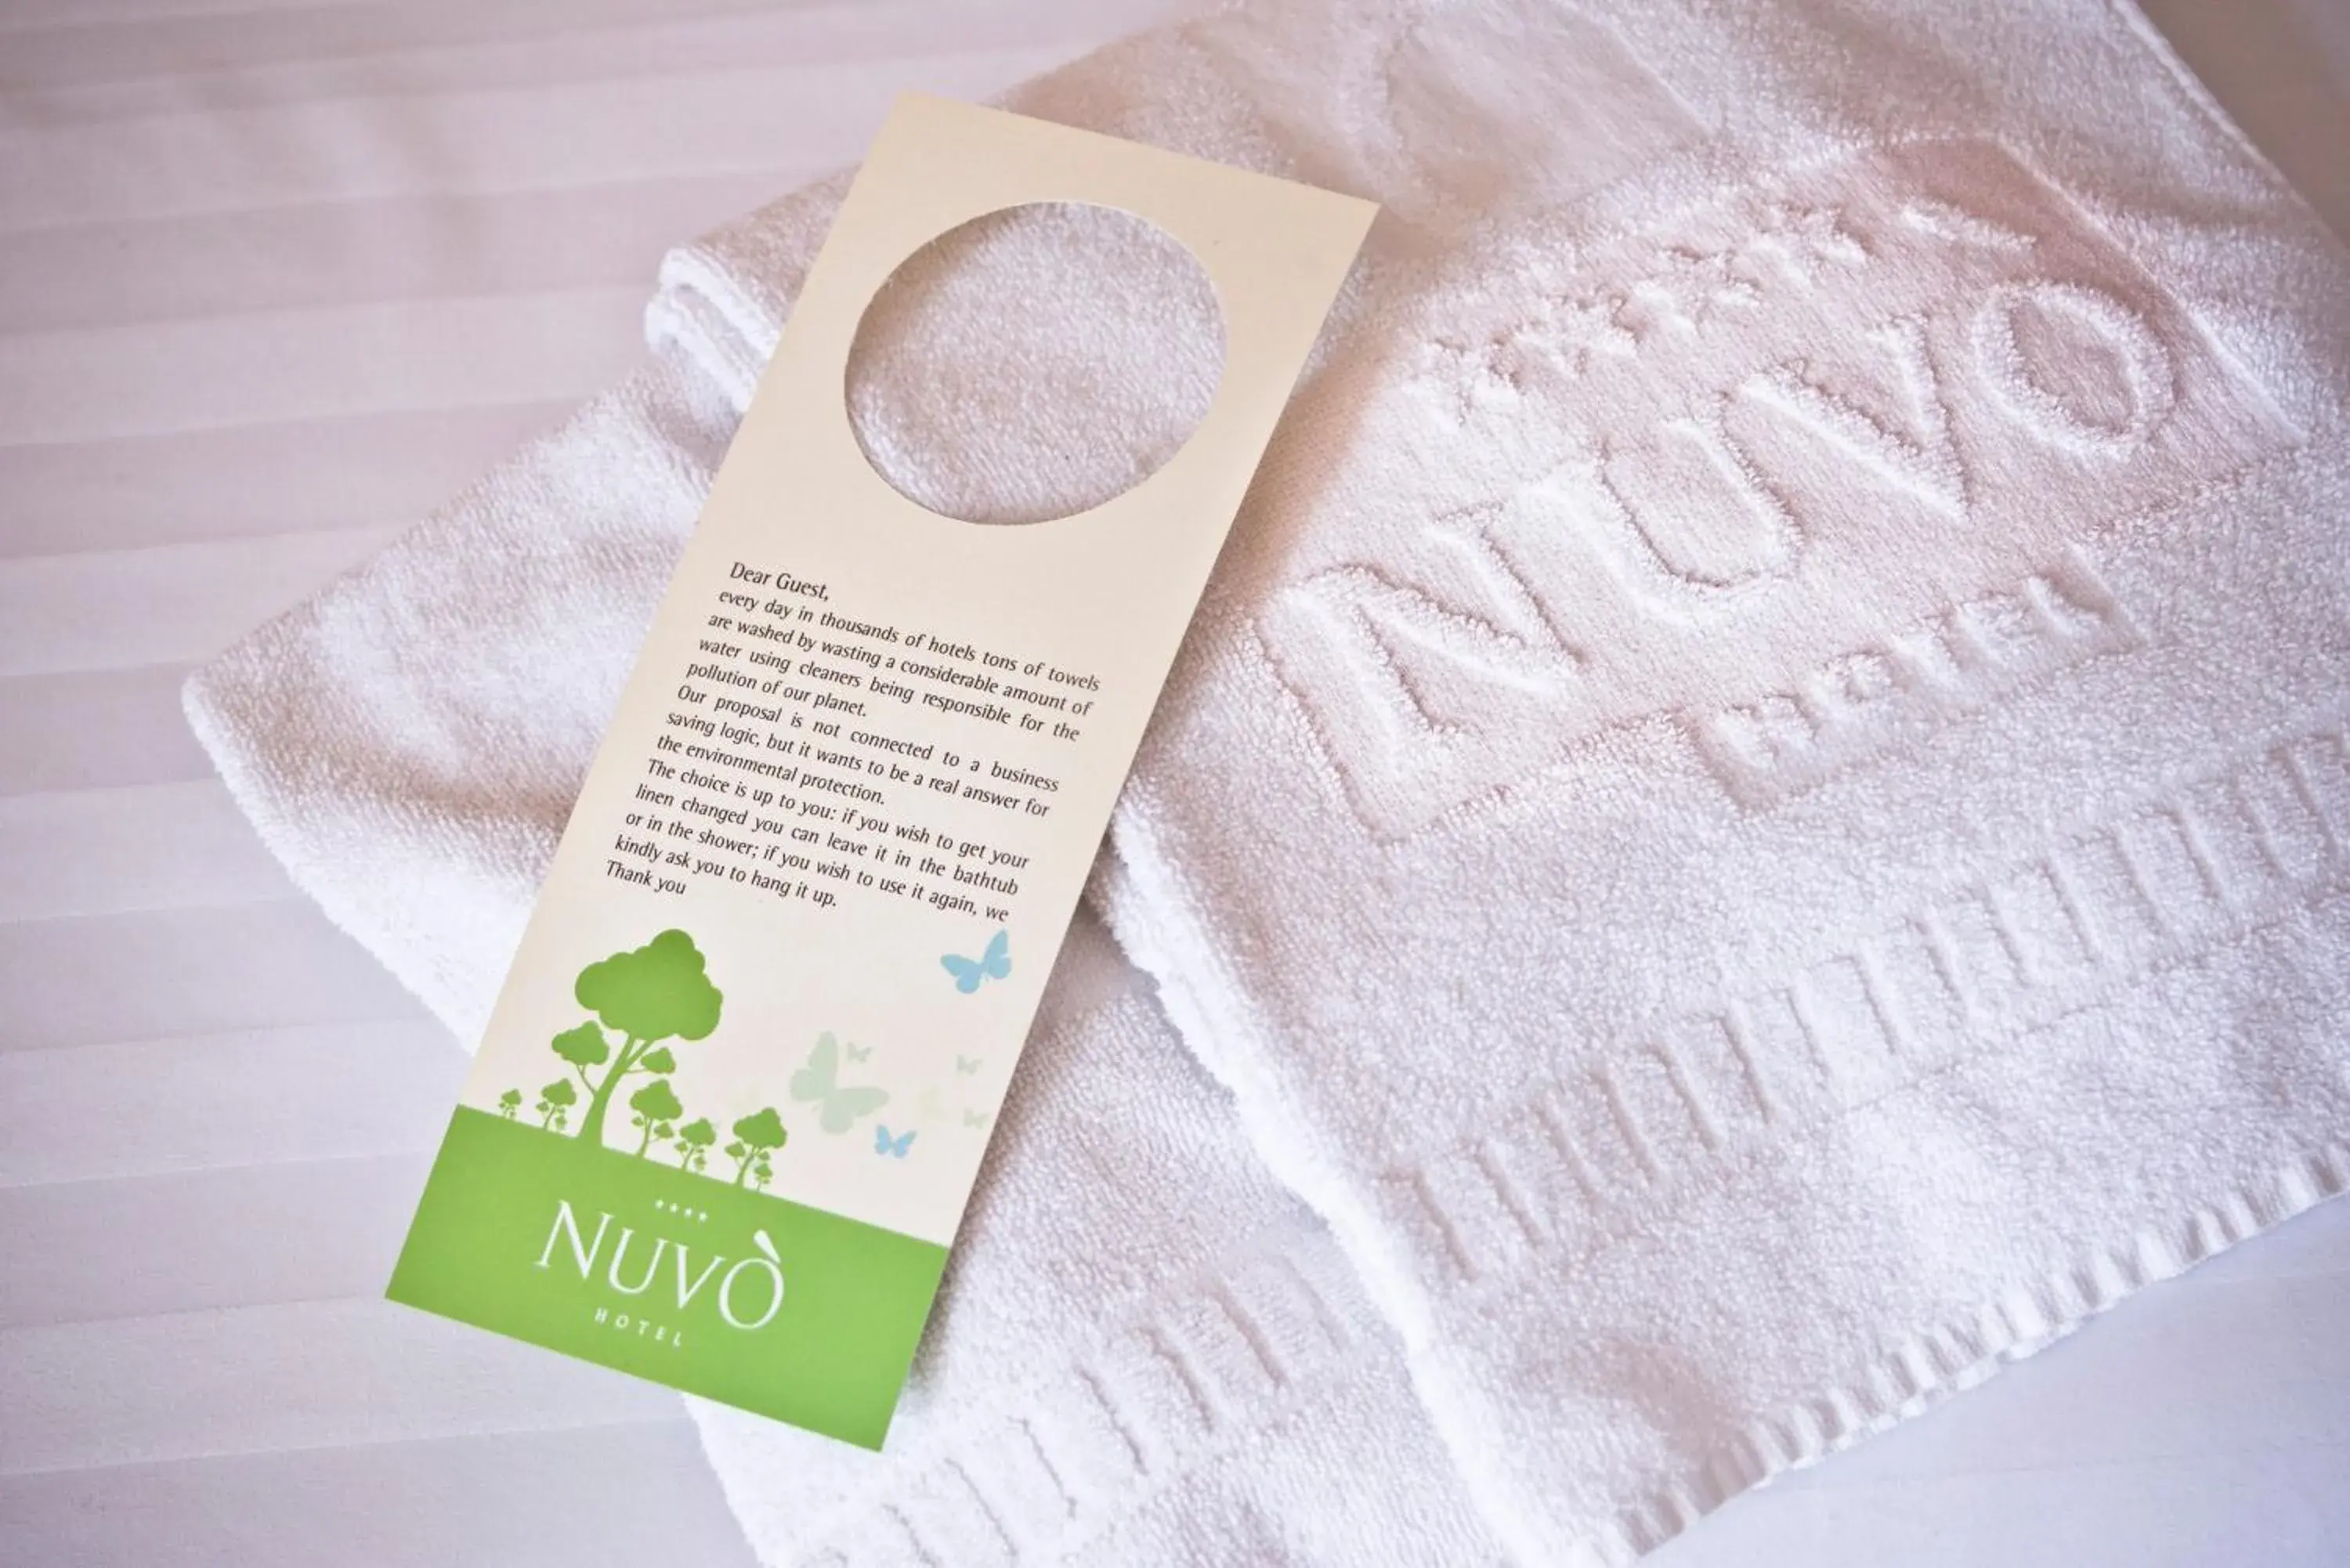 towels in Hotel Nuvò